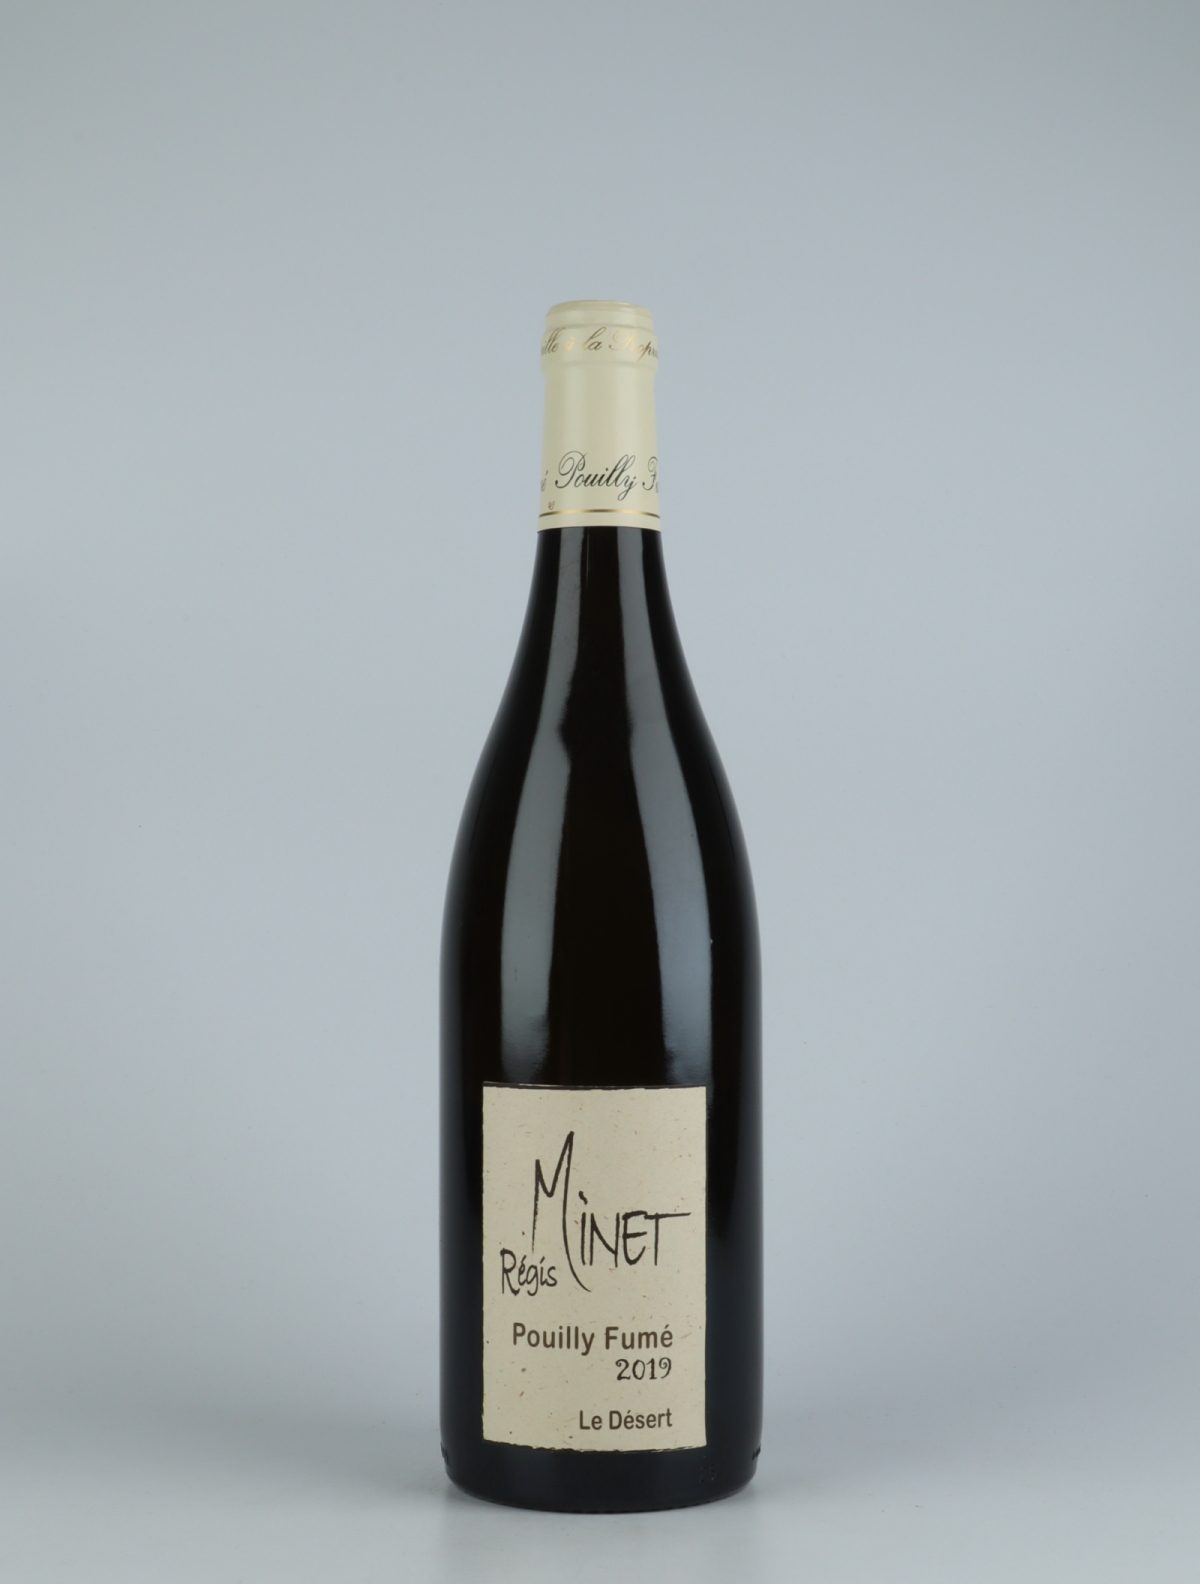 A bottle 2019 Pouilly Fumé - Le Desert White wine from Régis Minet, Loire in France